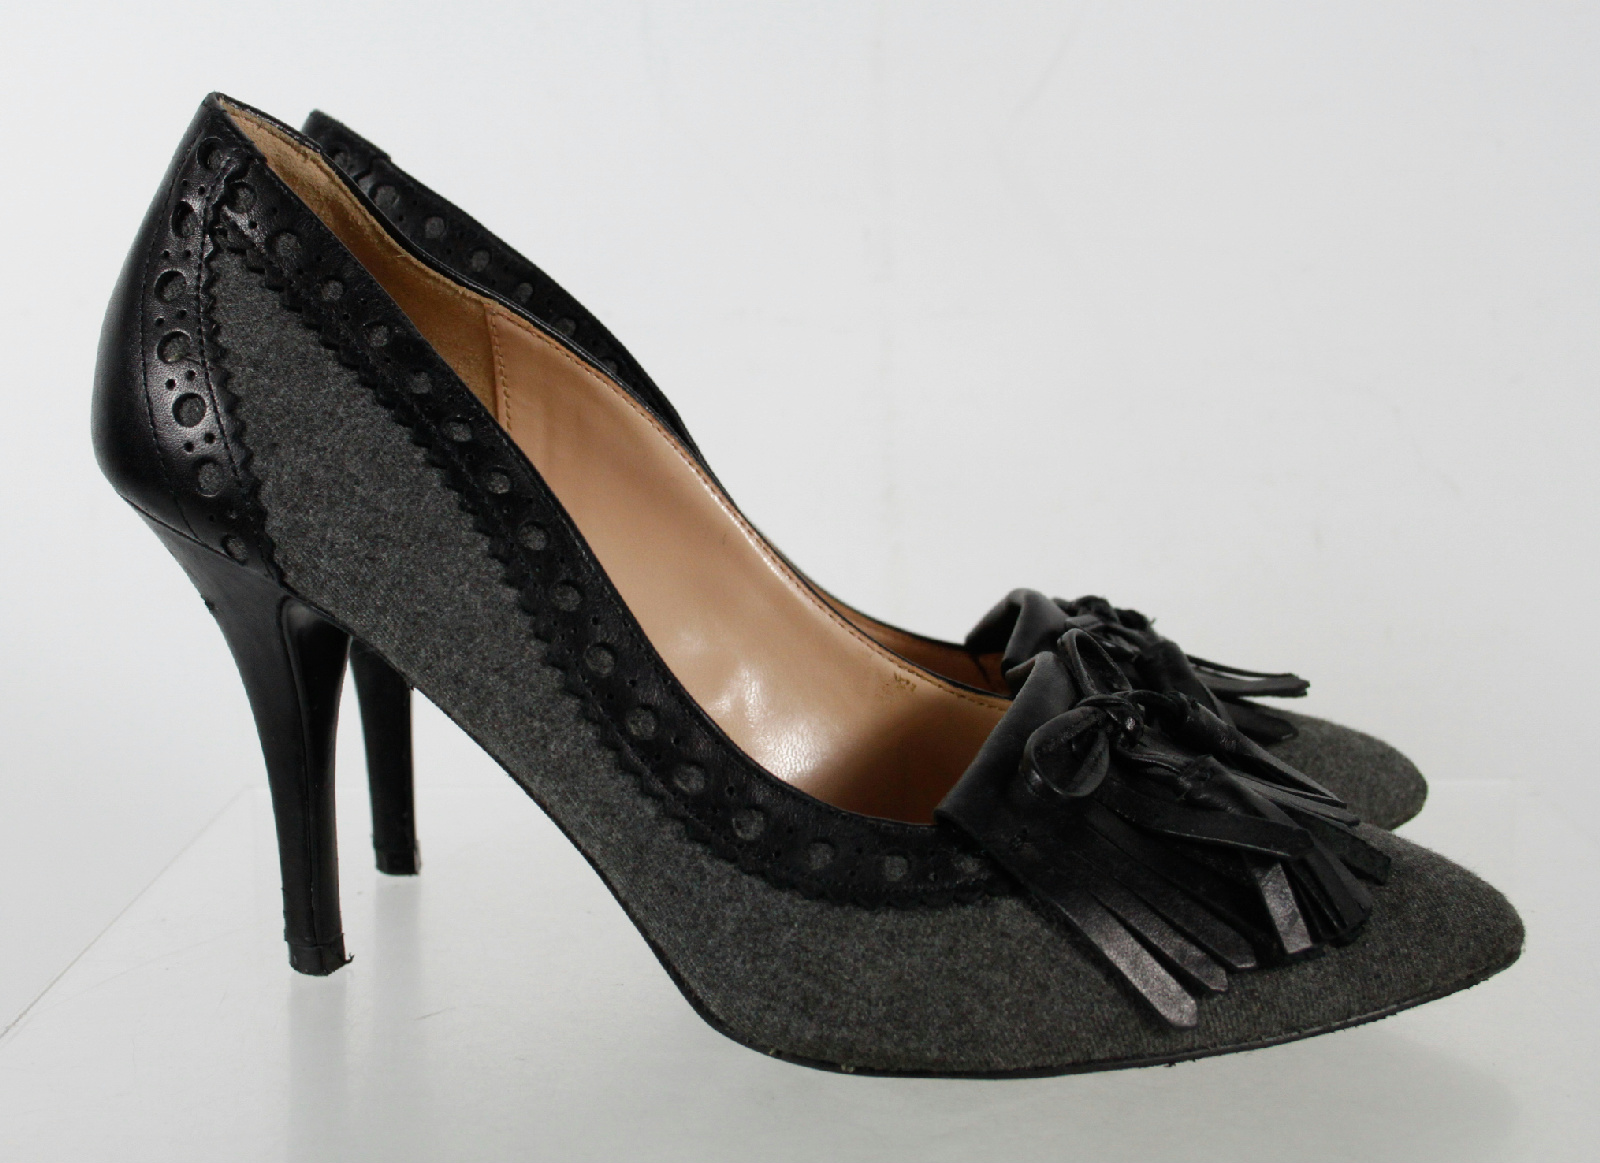 Audrey Brooke Black Gray Pump Heel Shoes Size 9 eBay